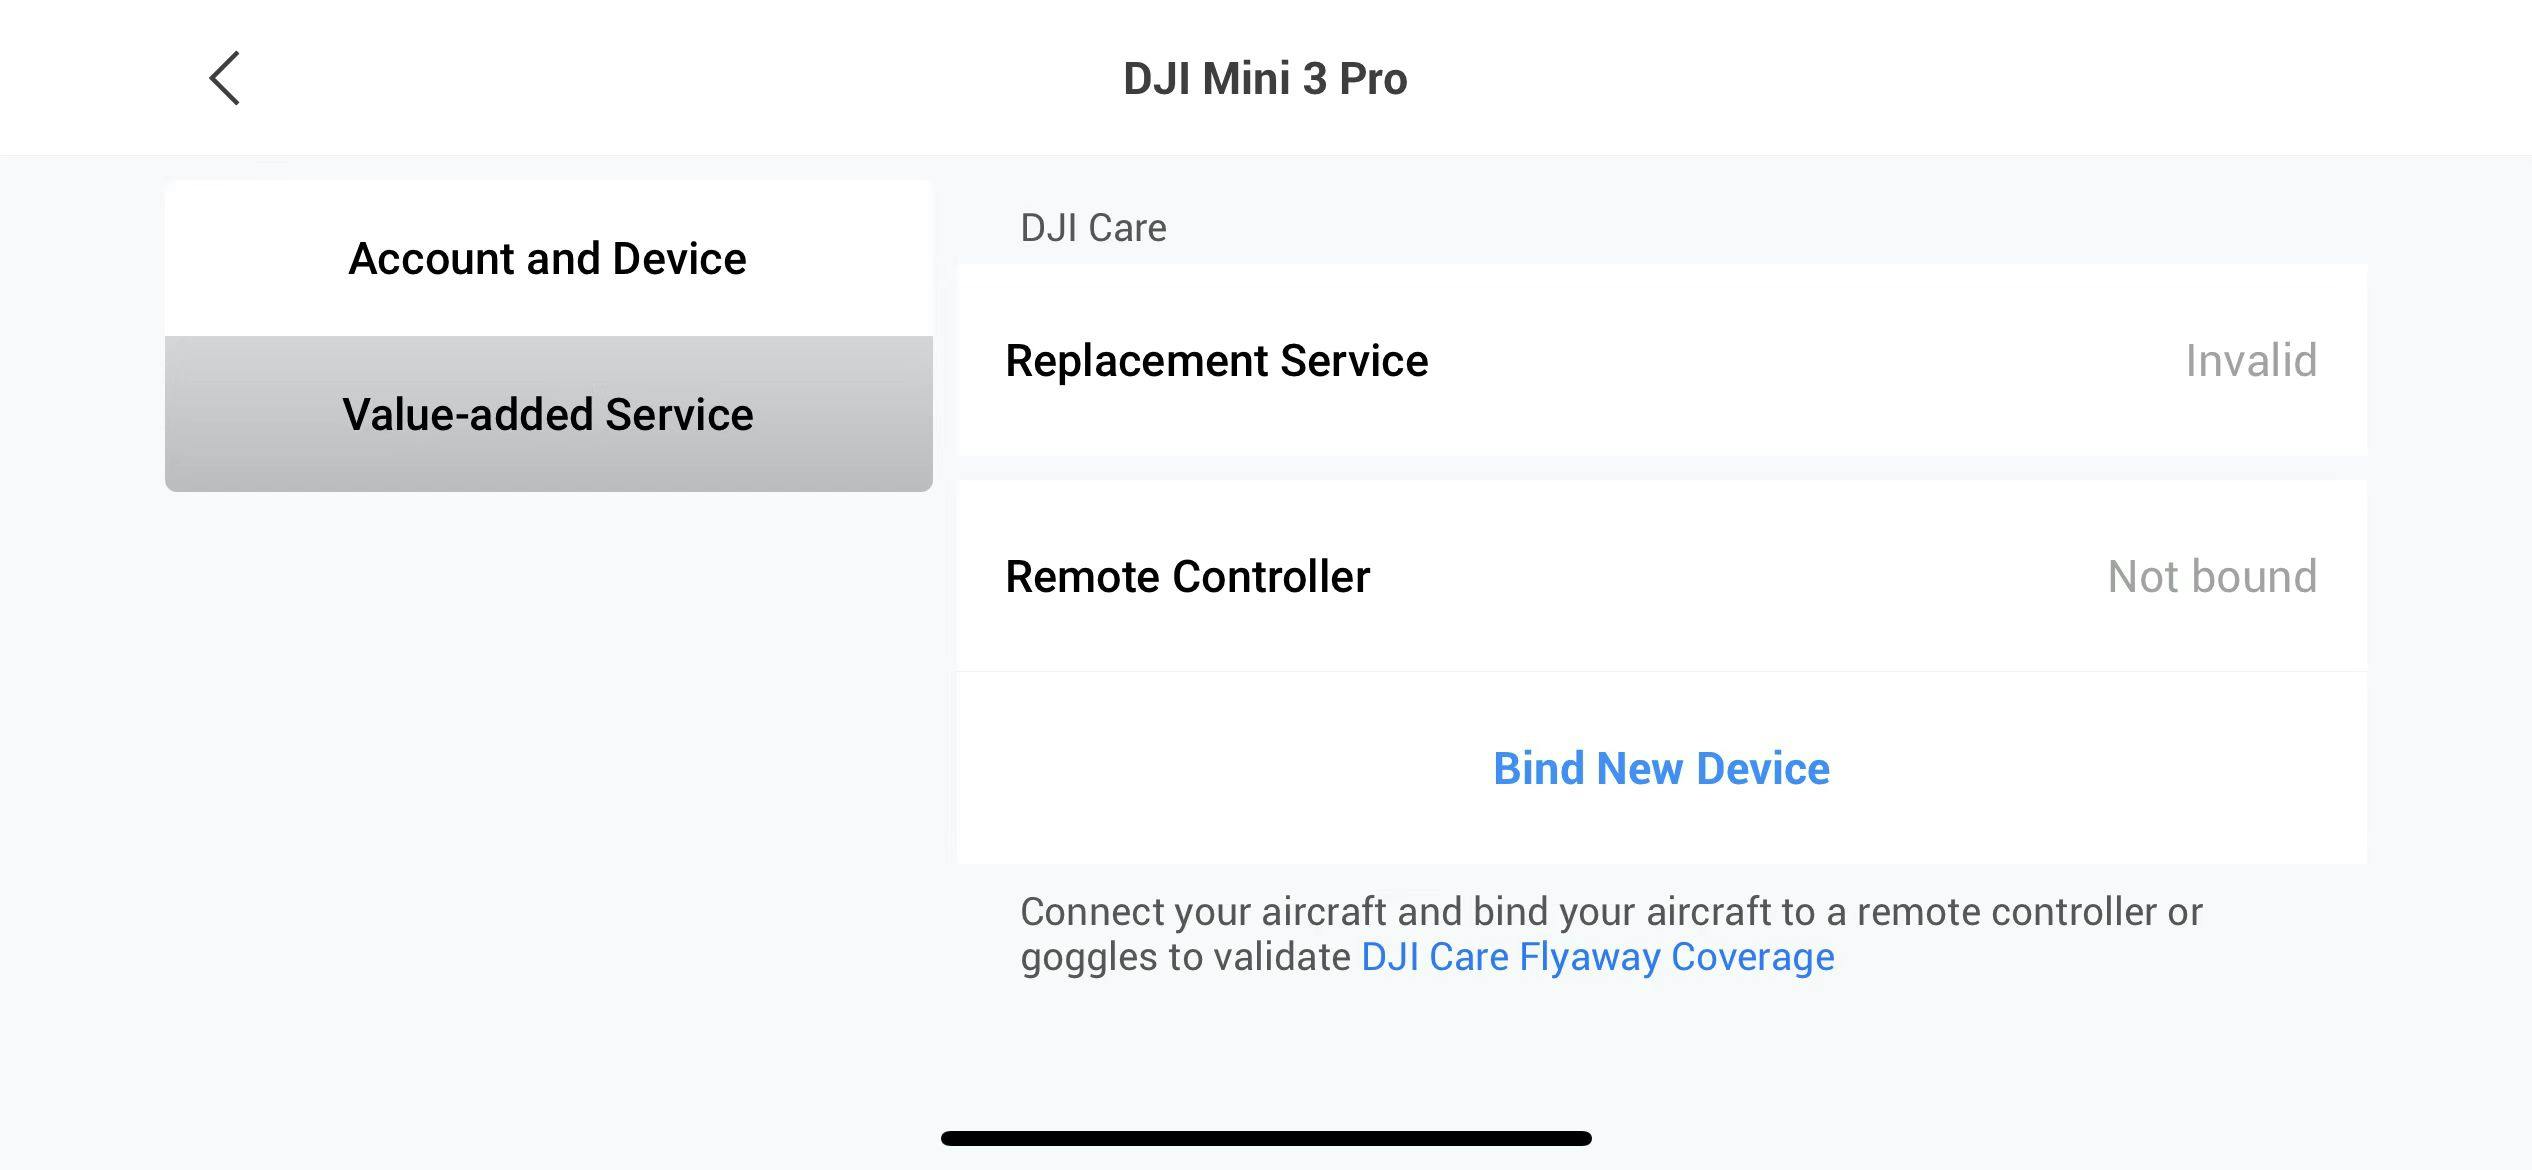 Skärmbild av DJI Mini 3 Pro-meny visar "Value-added Service". Under "DJI Care" finns "Replacement Service" (Invalid) och "Remote Controller" (Not bound). Knapp: "Bind New Device". Instruktion: "Bind aircraft to validate DJI Care Flyaway Coverage".